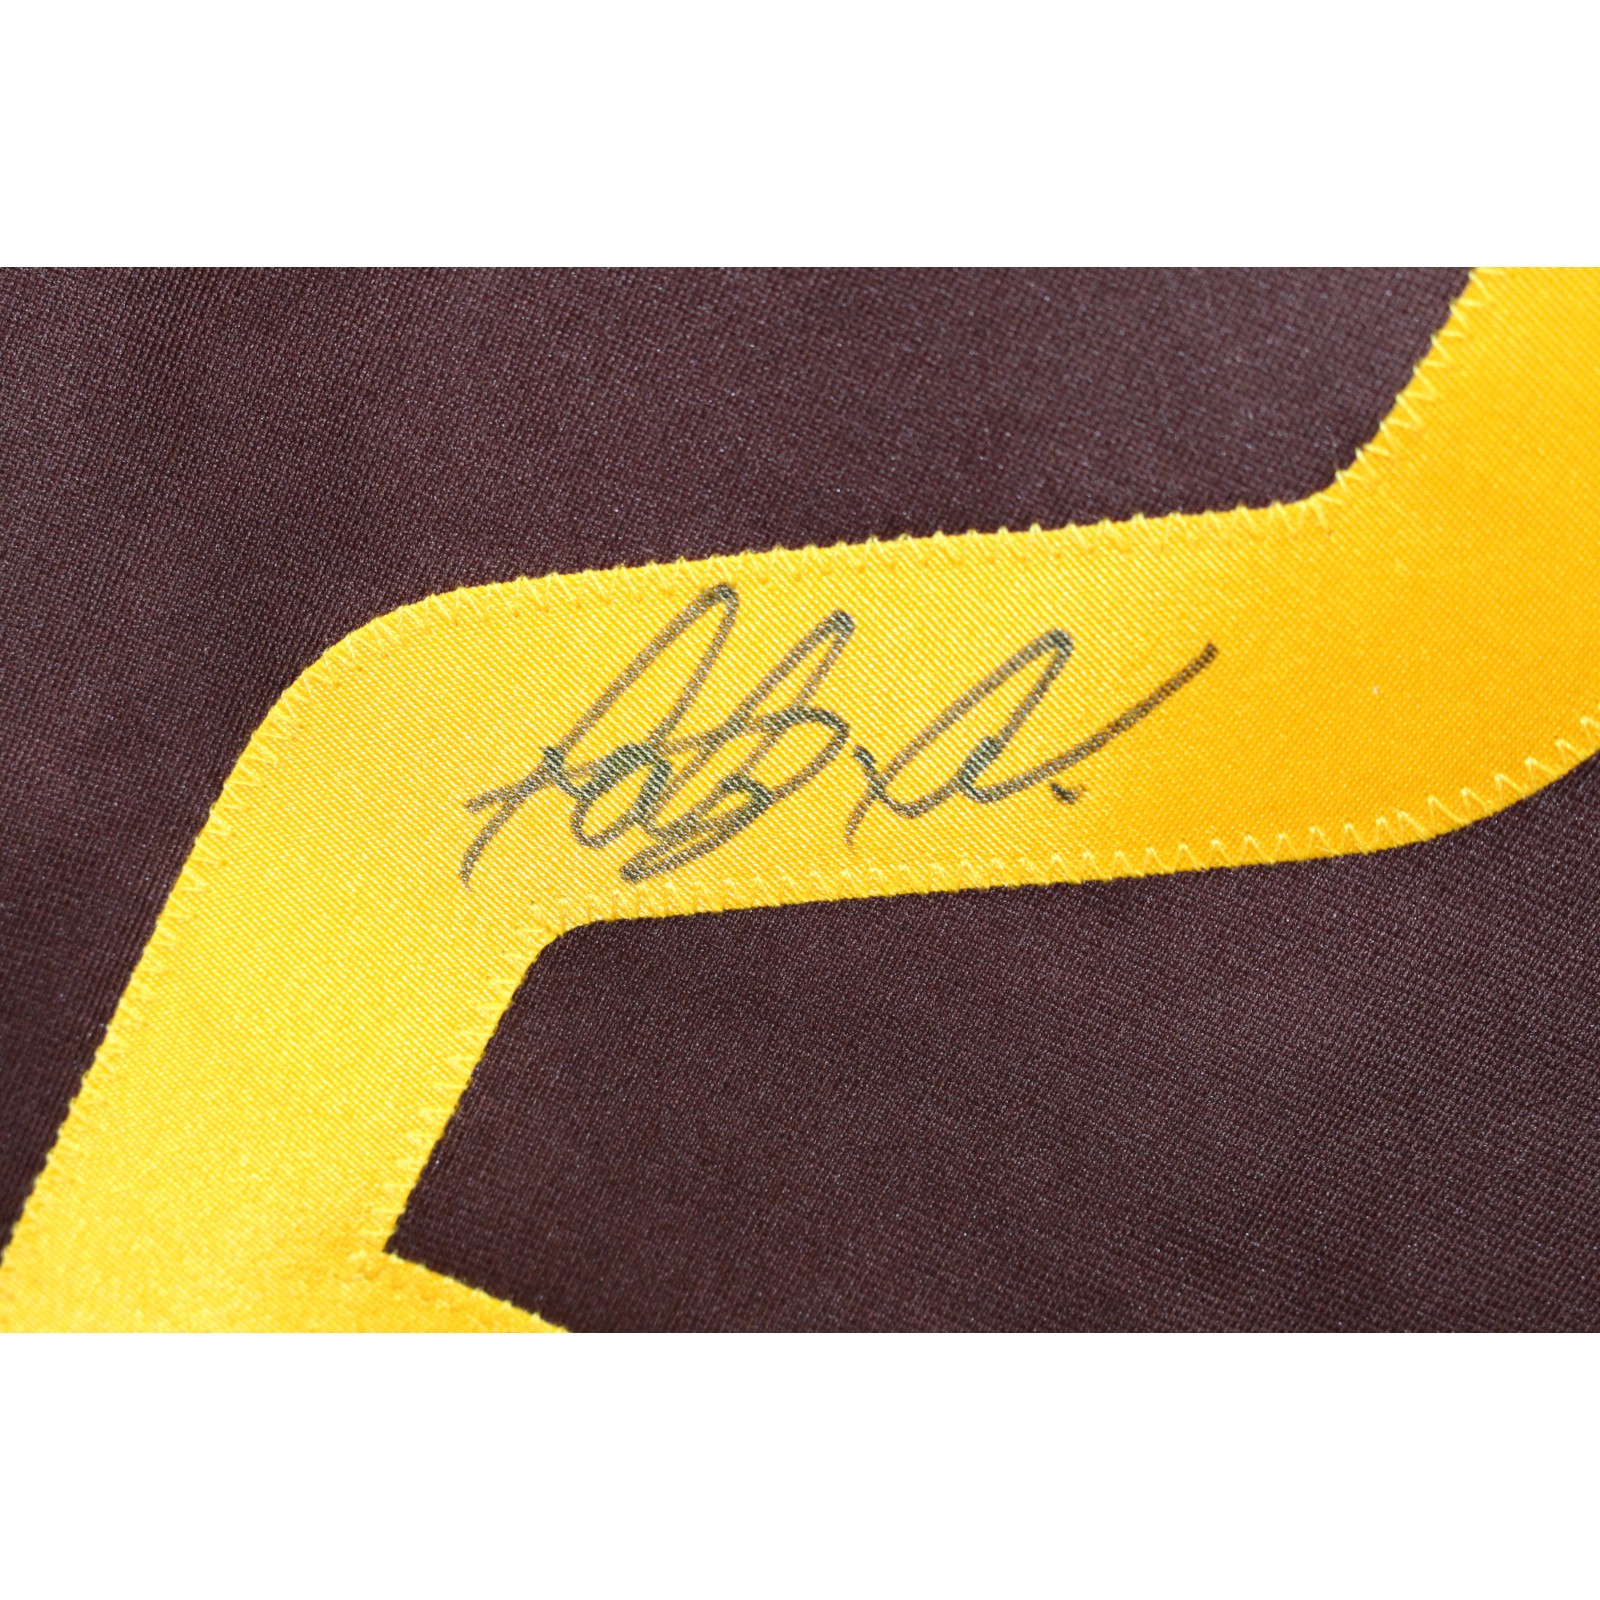 Fernando Tatis Jr. Autographed/Signed Pro Style Brown Jersey Beckett